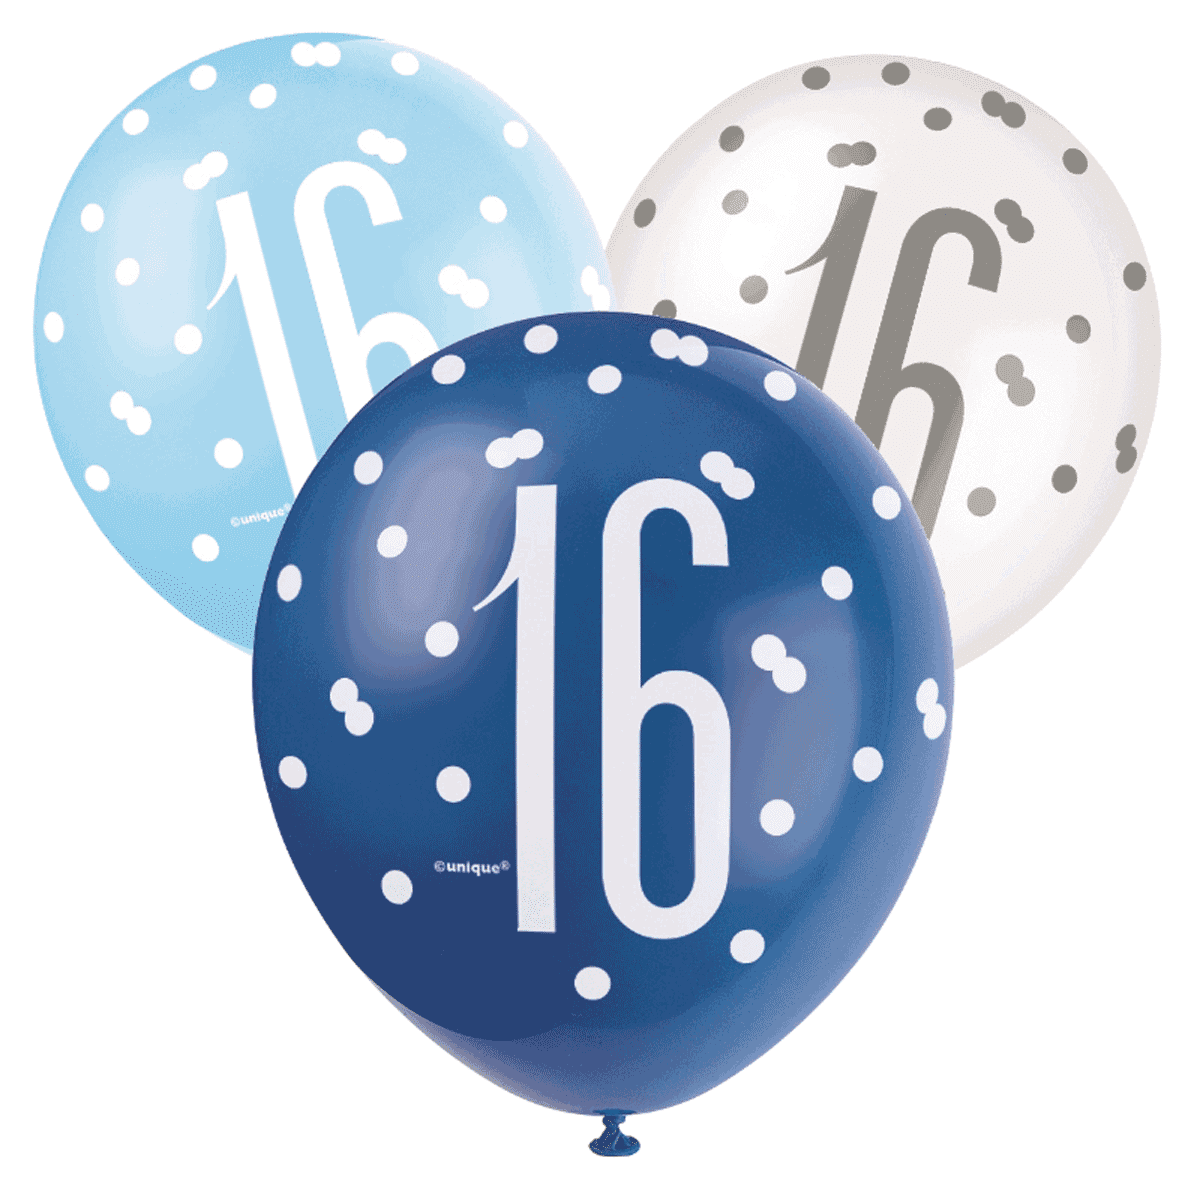 Blue, Silver, & White Latex Balloons 16th